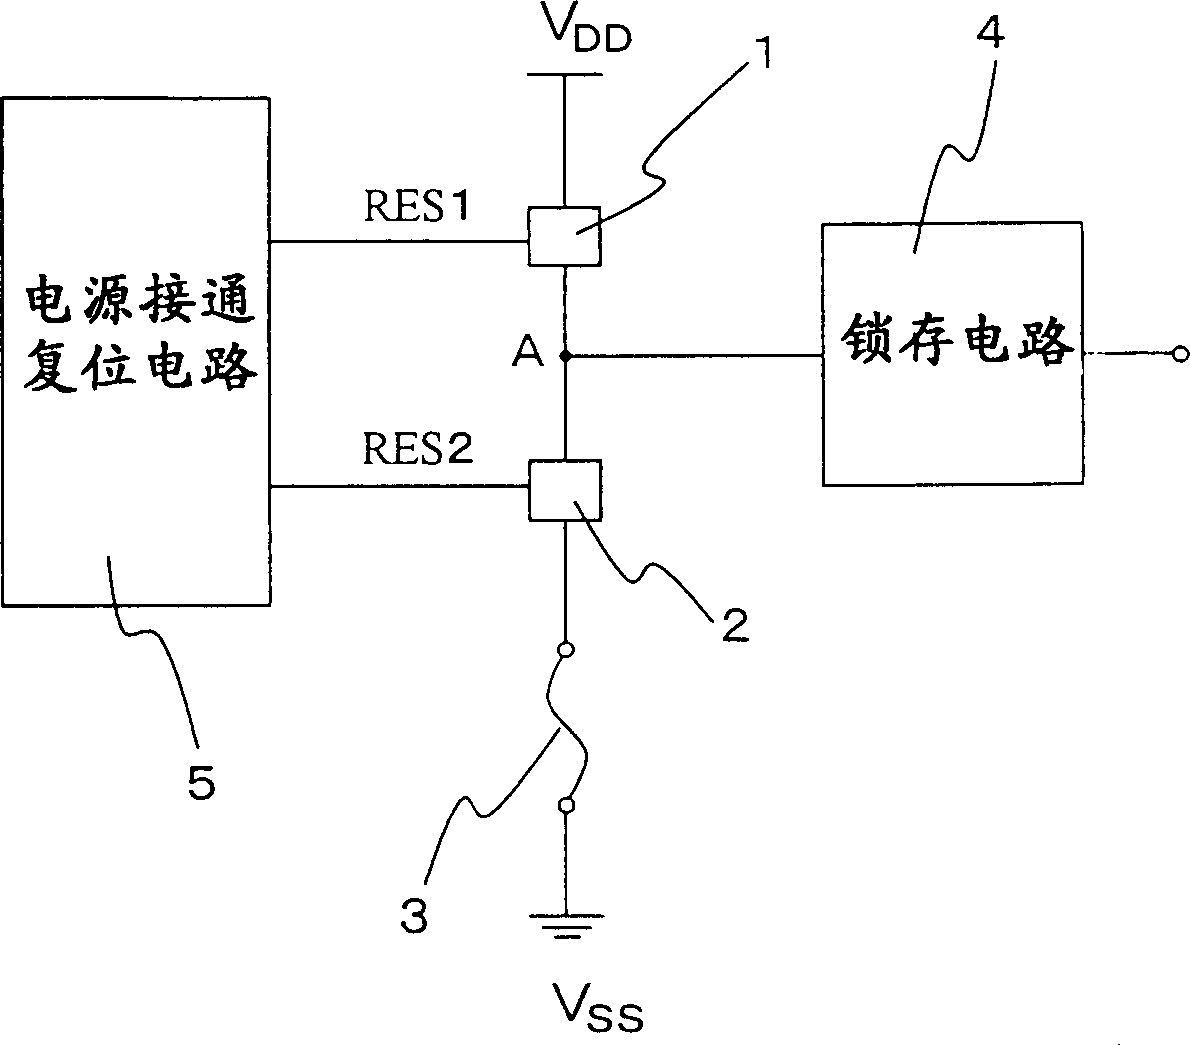 Address generating circuit